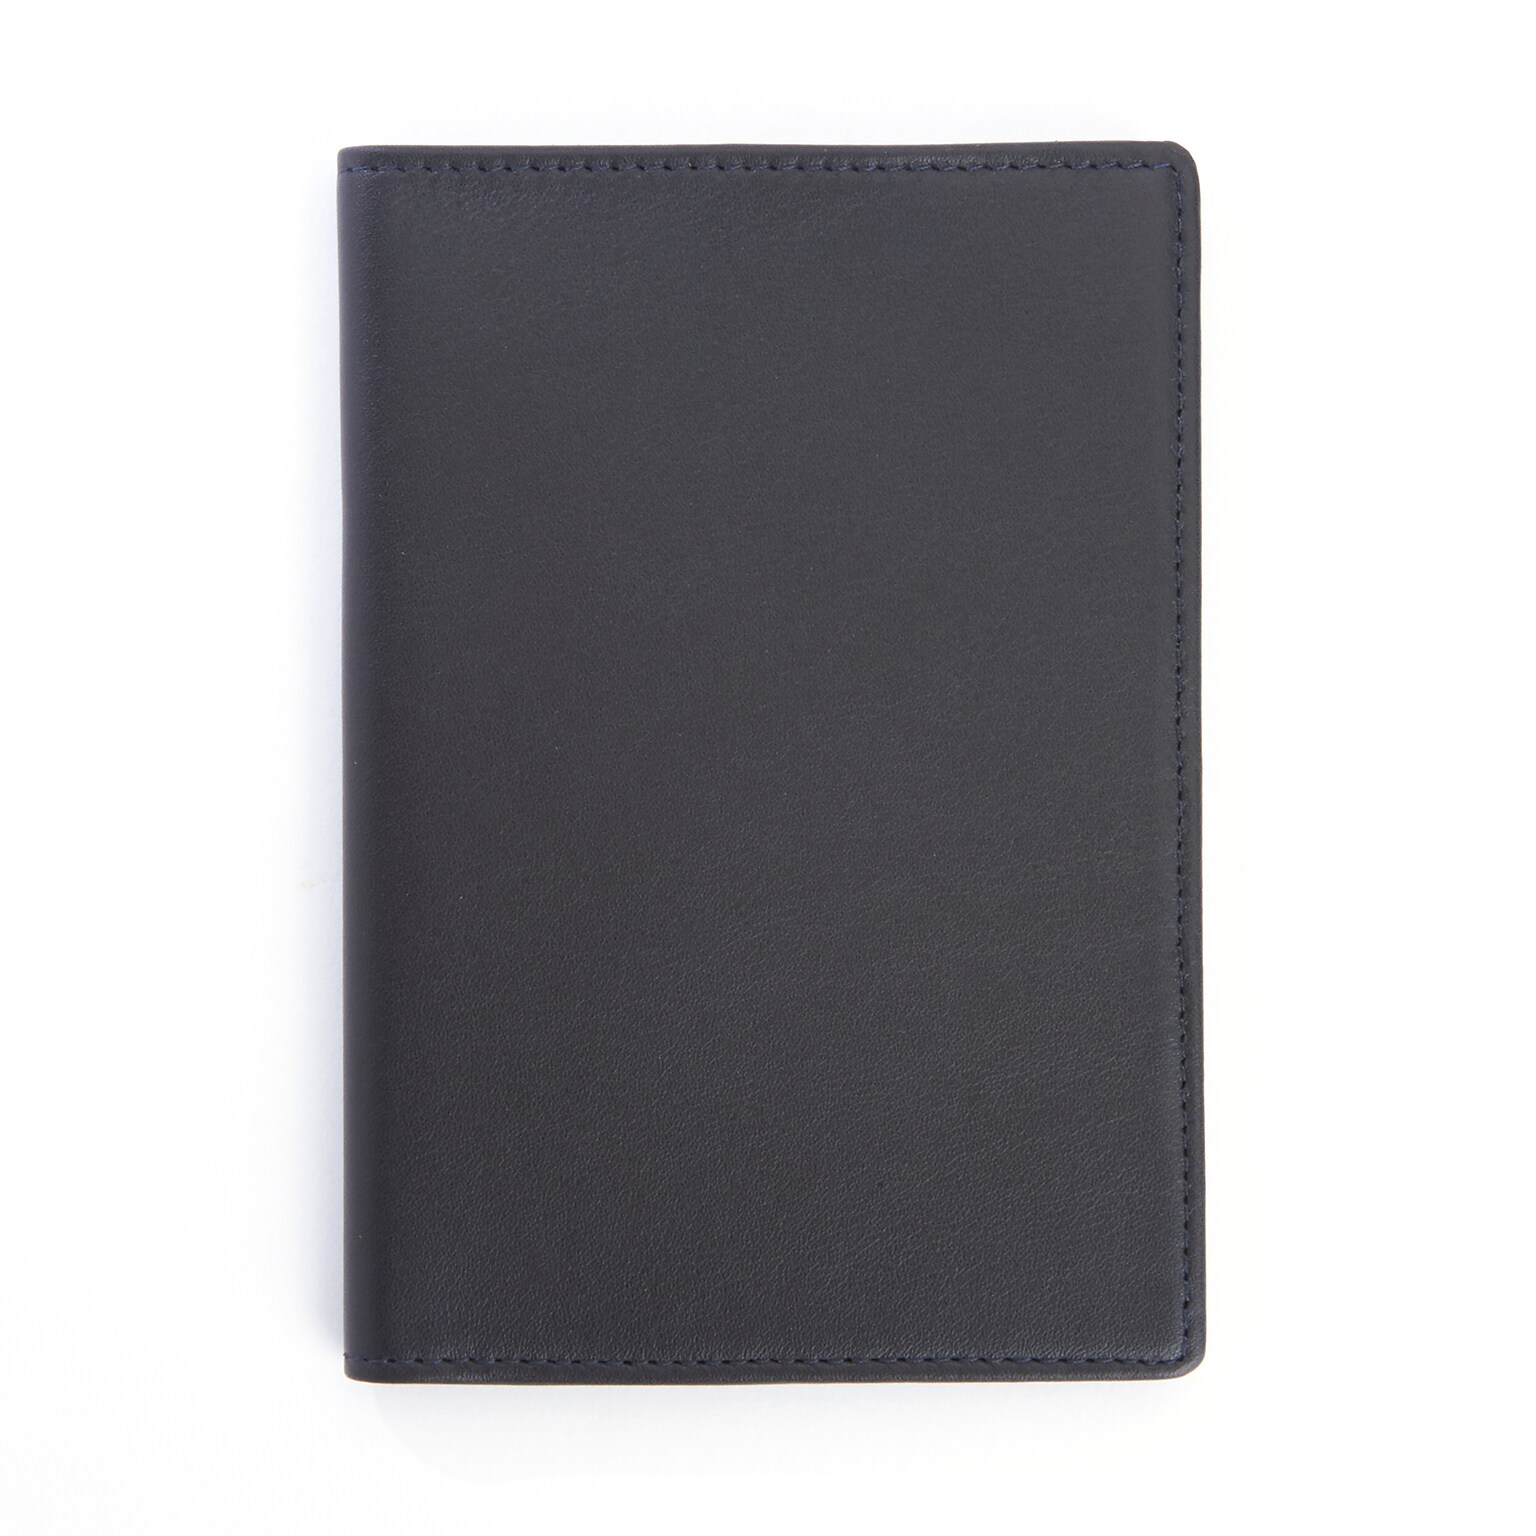 Royce Leather RFID Blocking Passport Travel Document Organizer (RFID-200-BLE-5)